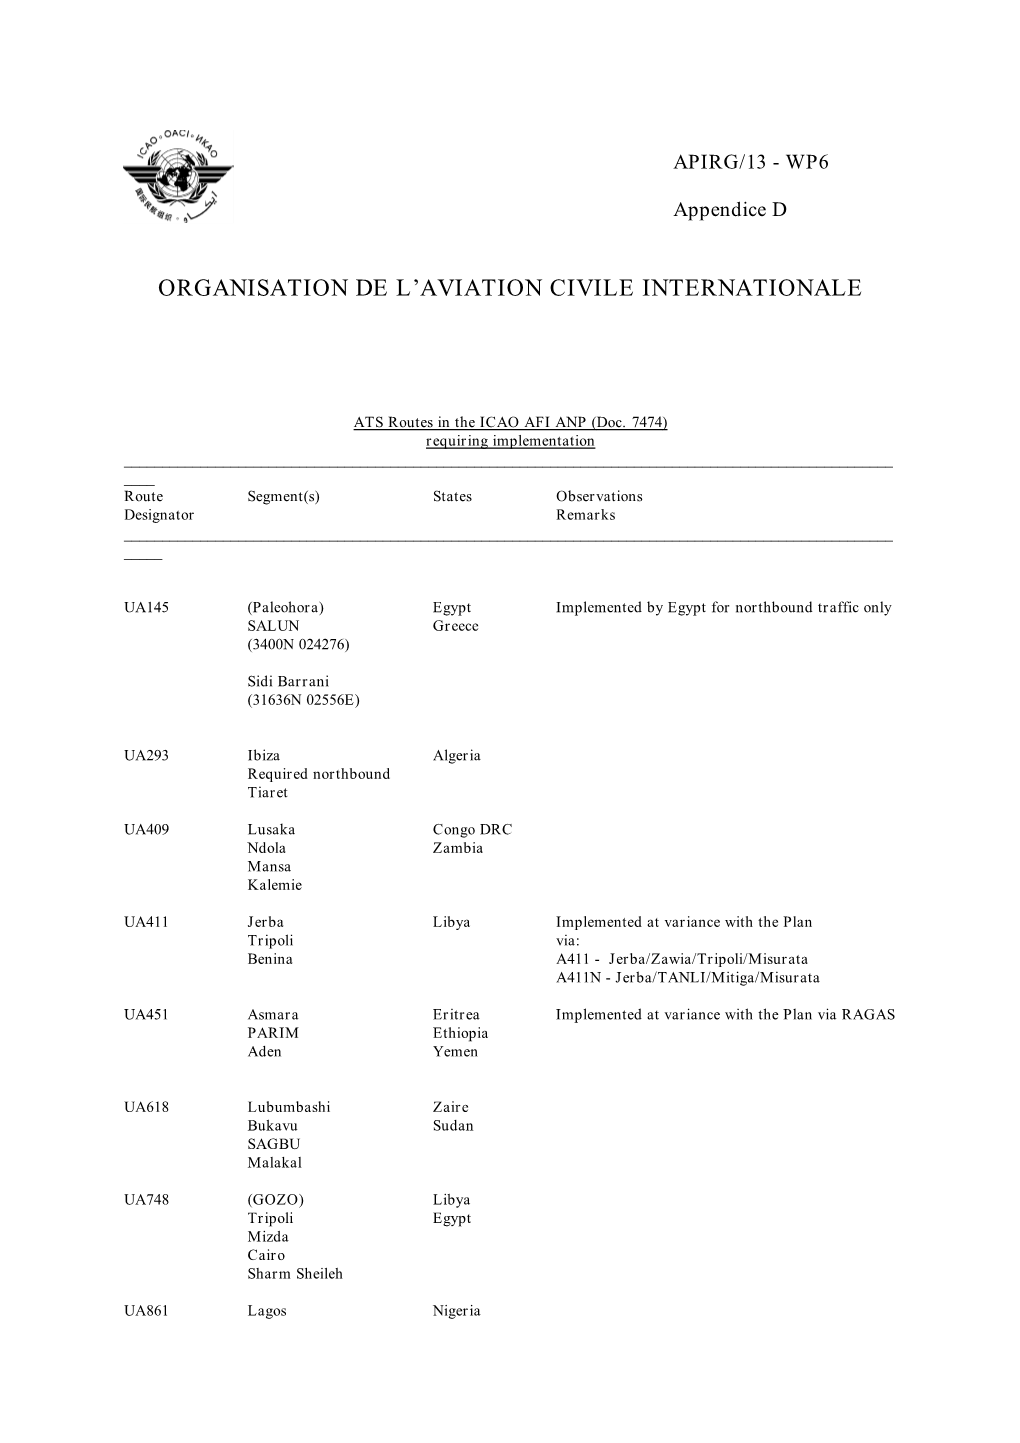 Organisation De L'aviation Civile Internationale